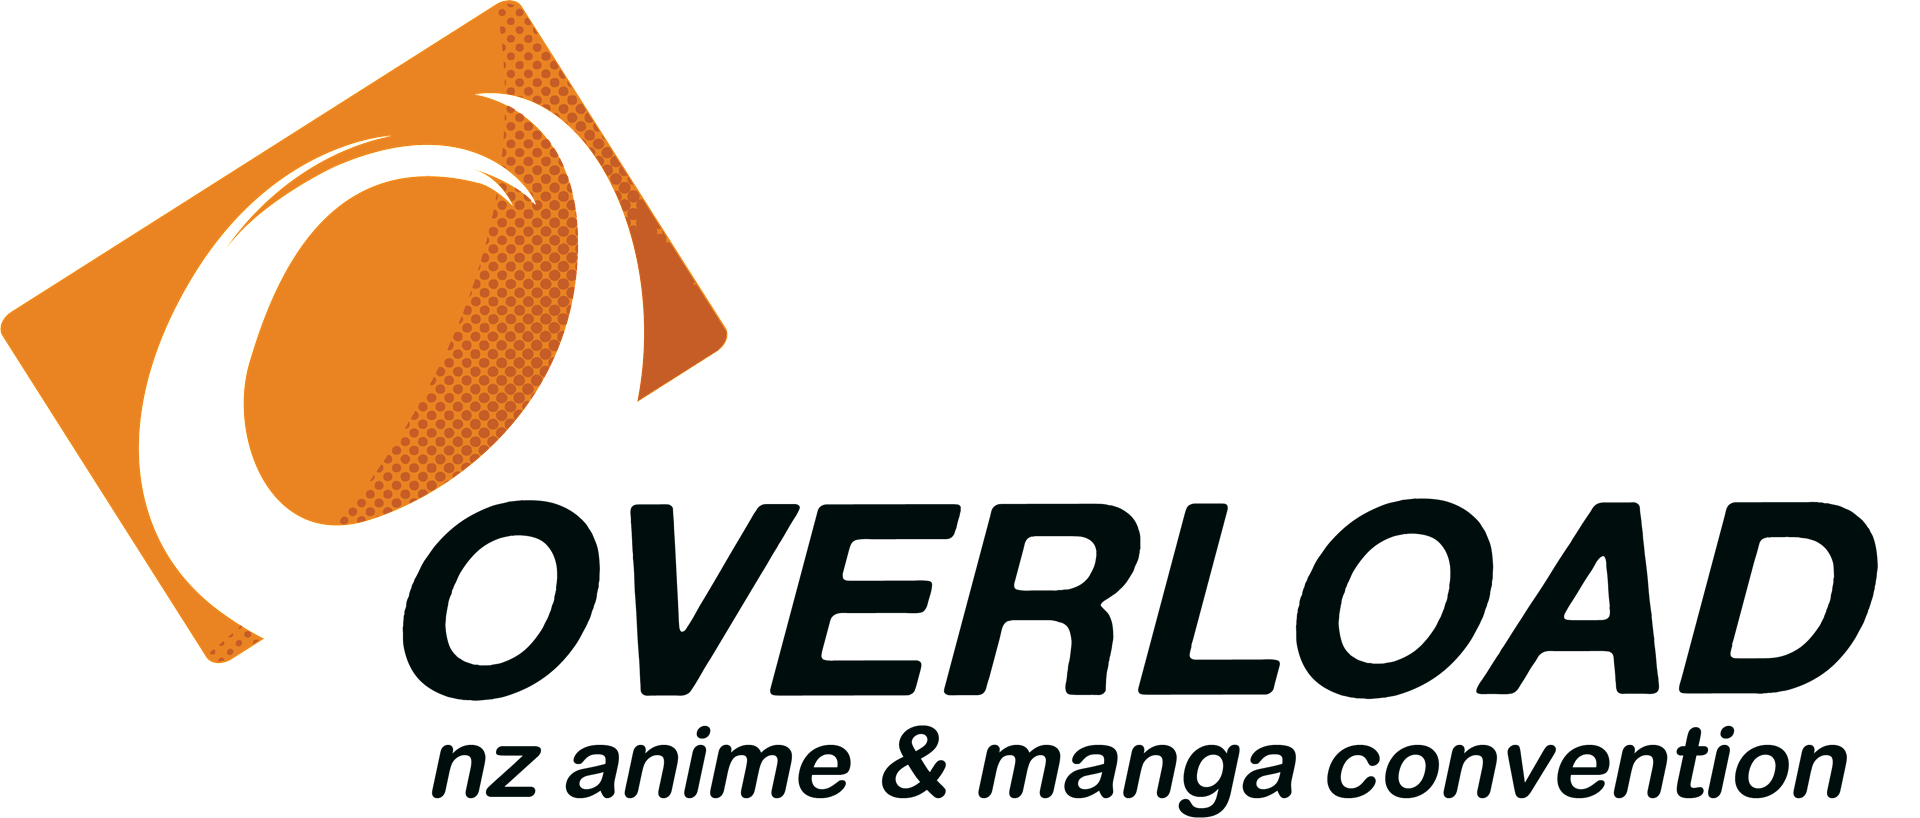 Overload NZ Anime & Manga Convention - Auckland - Eventfinda